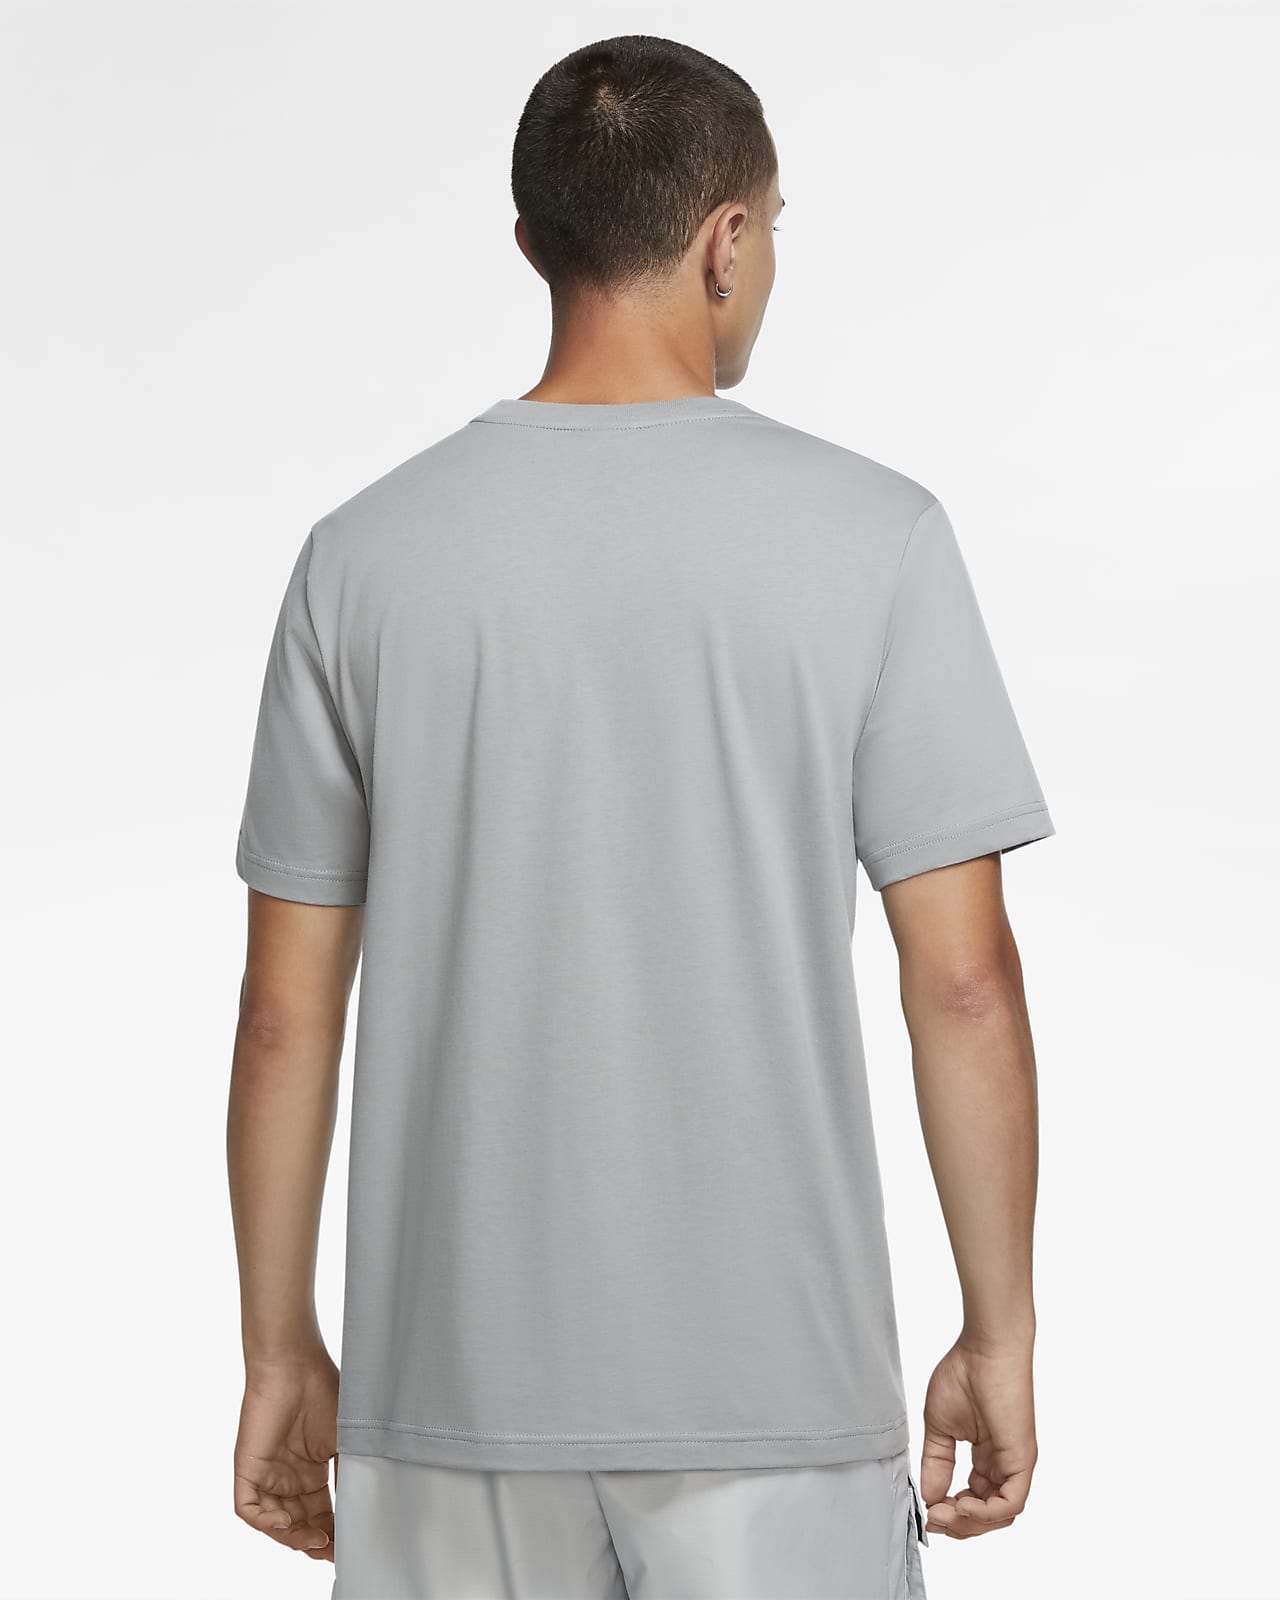 T-shirts homme Nike Air T-Shirt Black